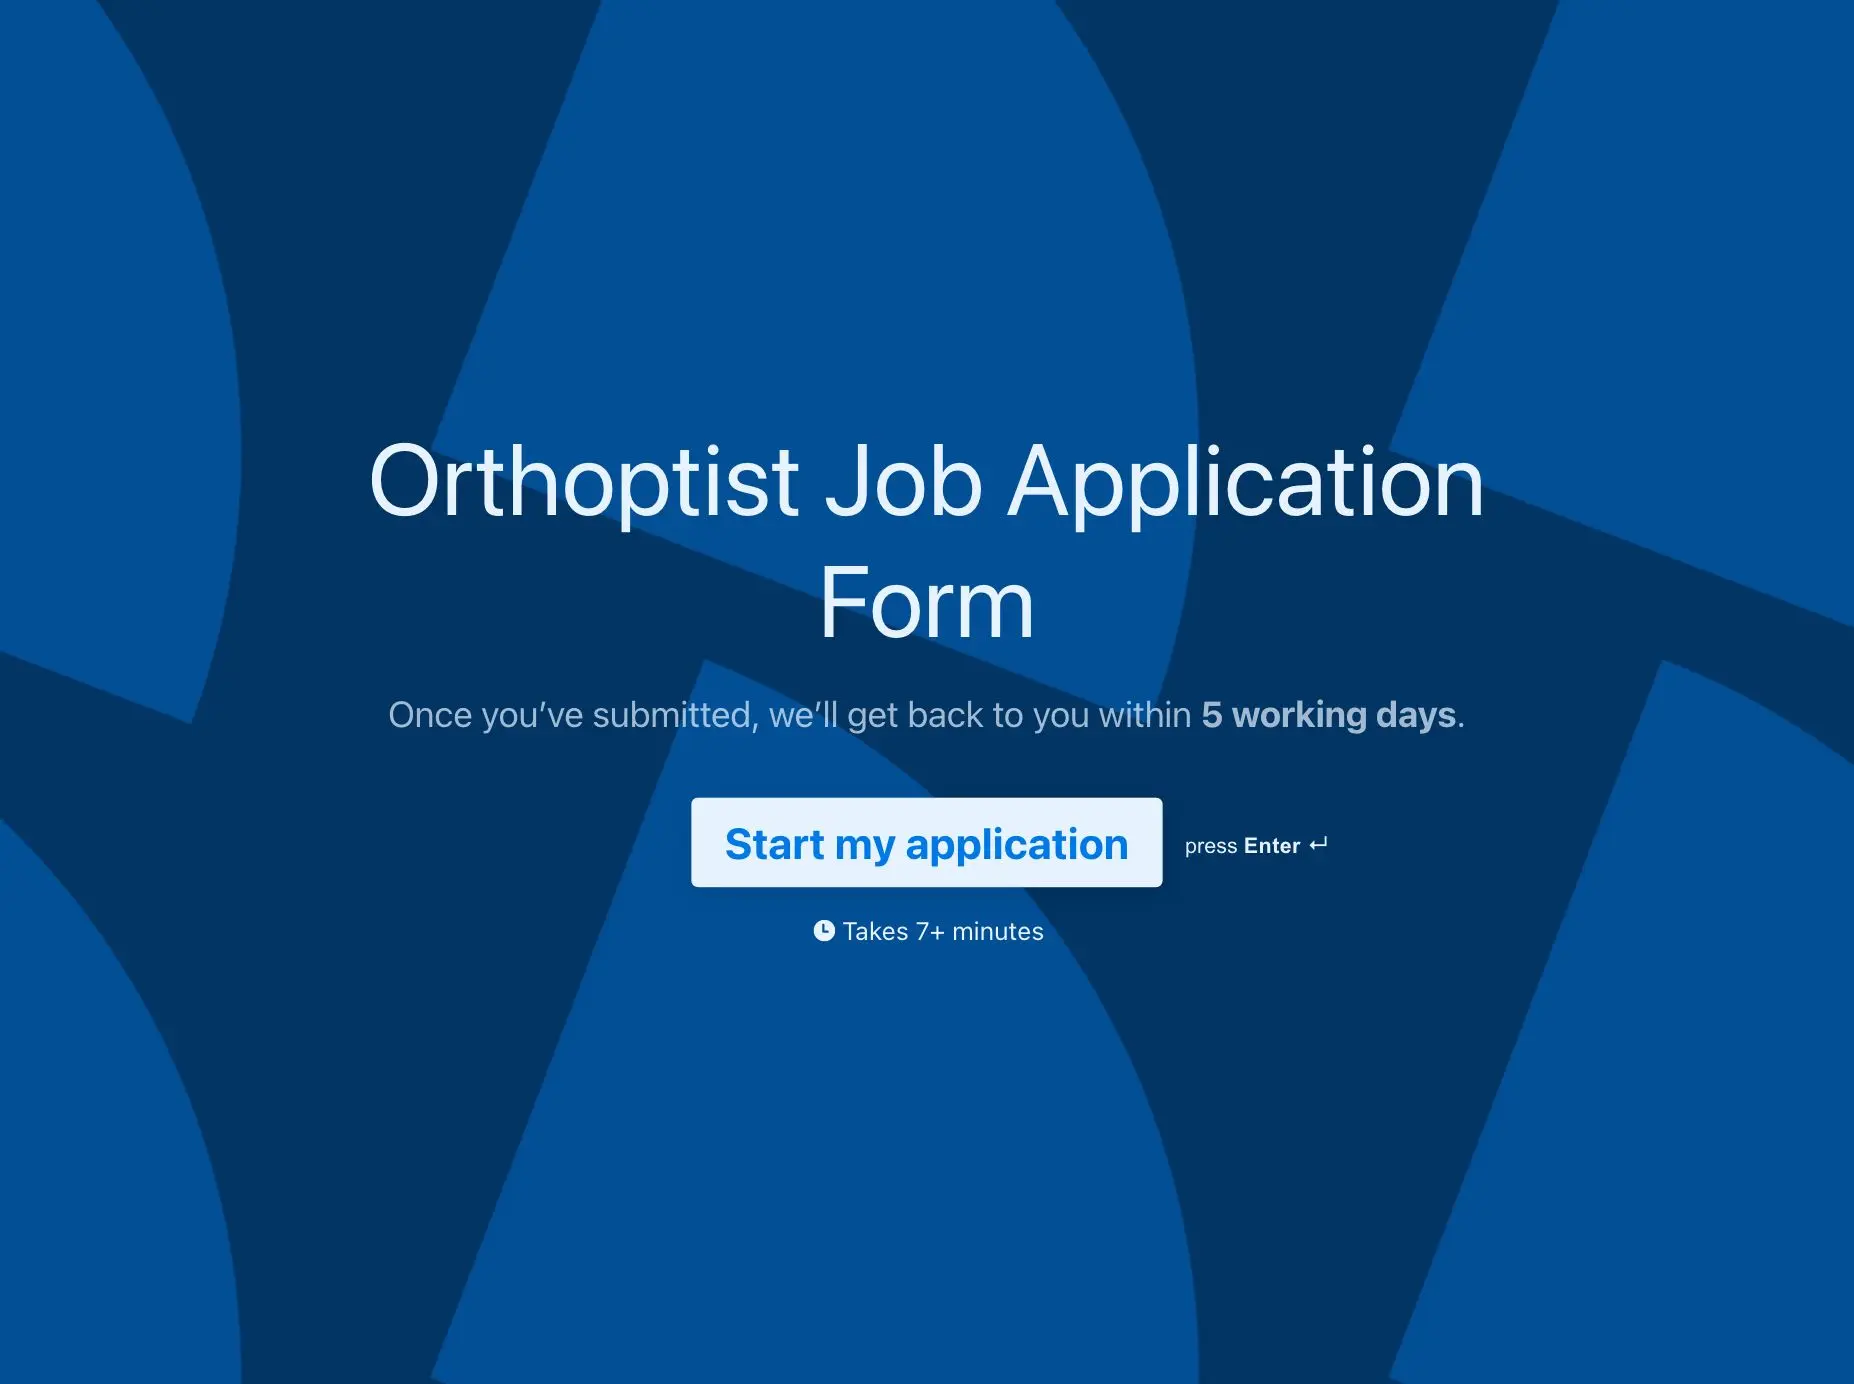 Orthoptist Job Application Form Template Hero